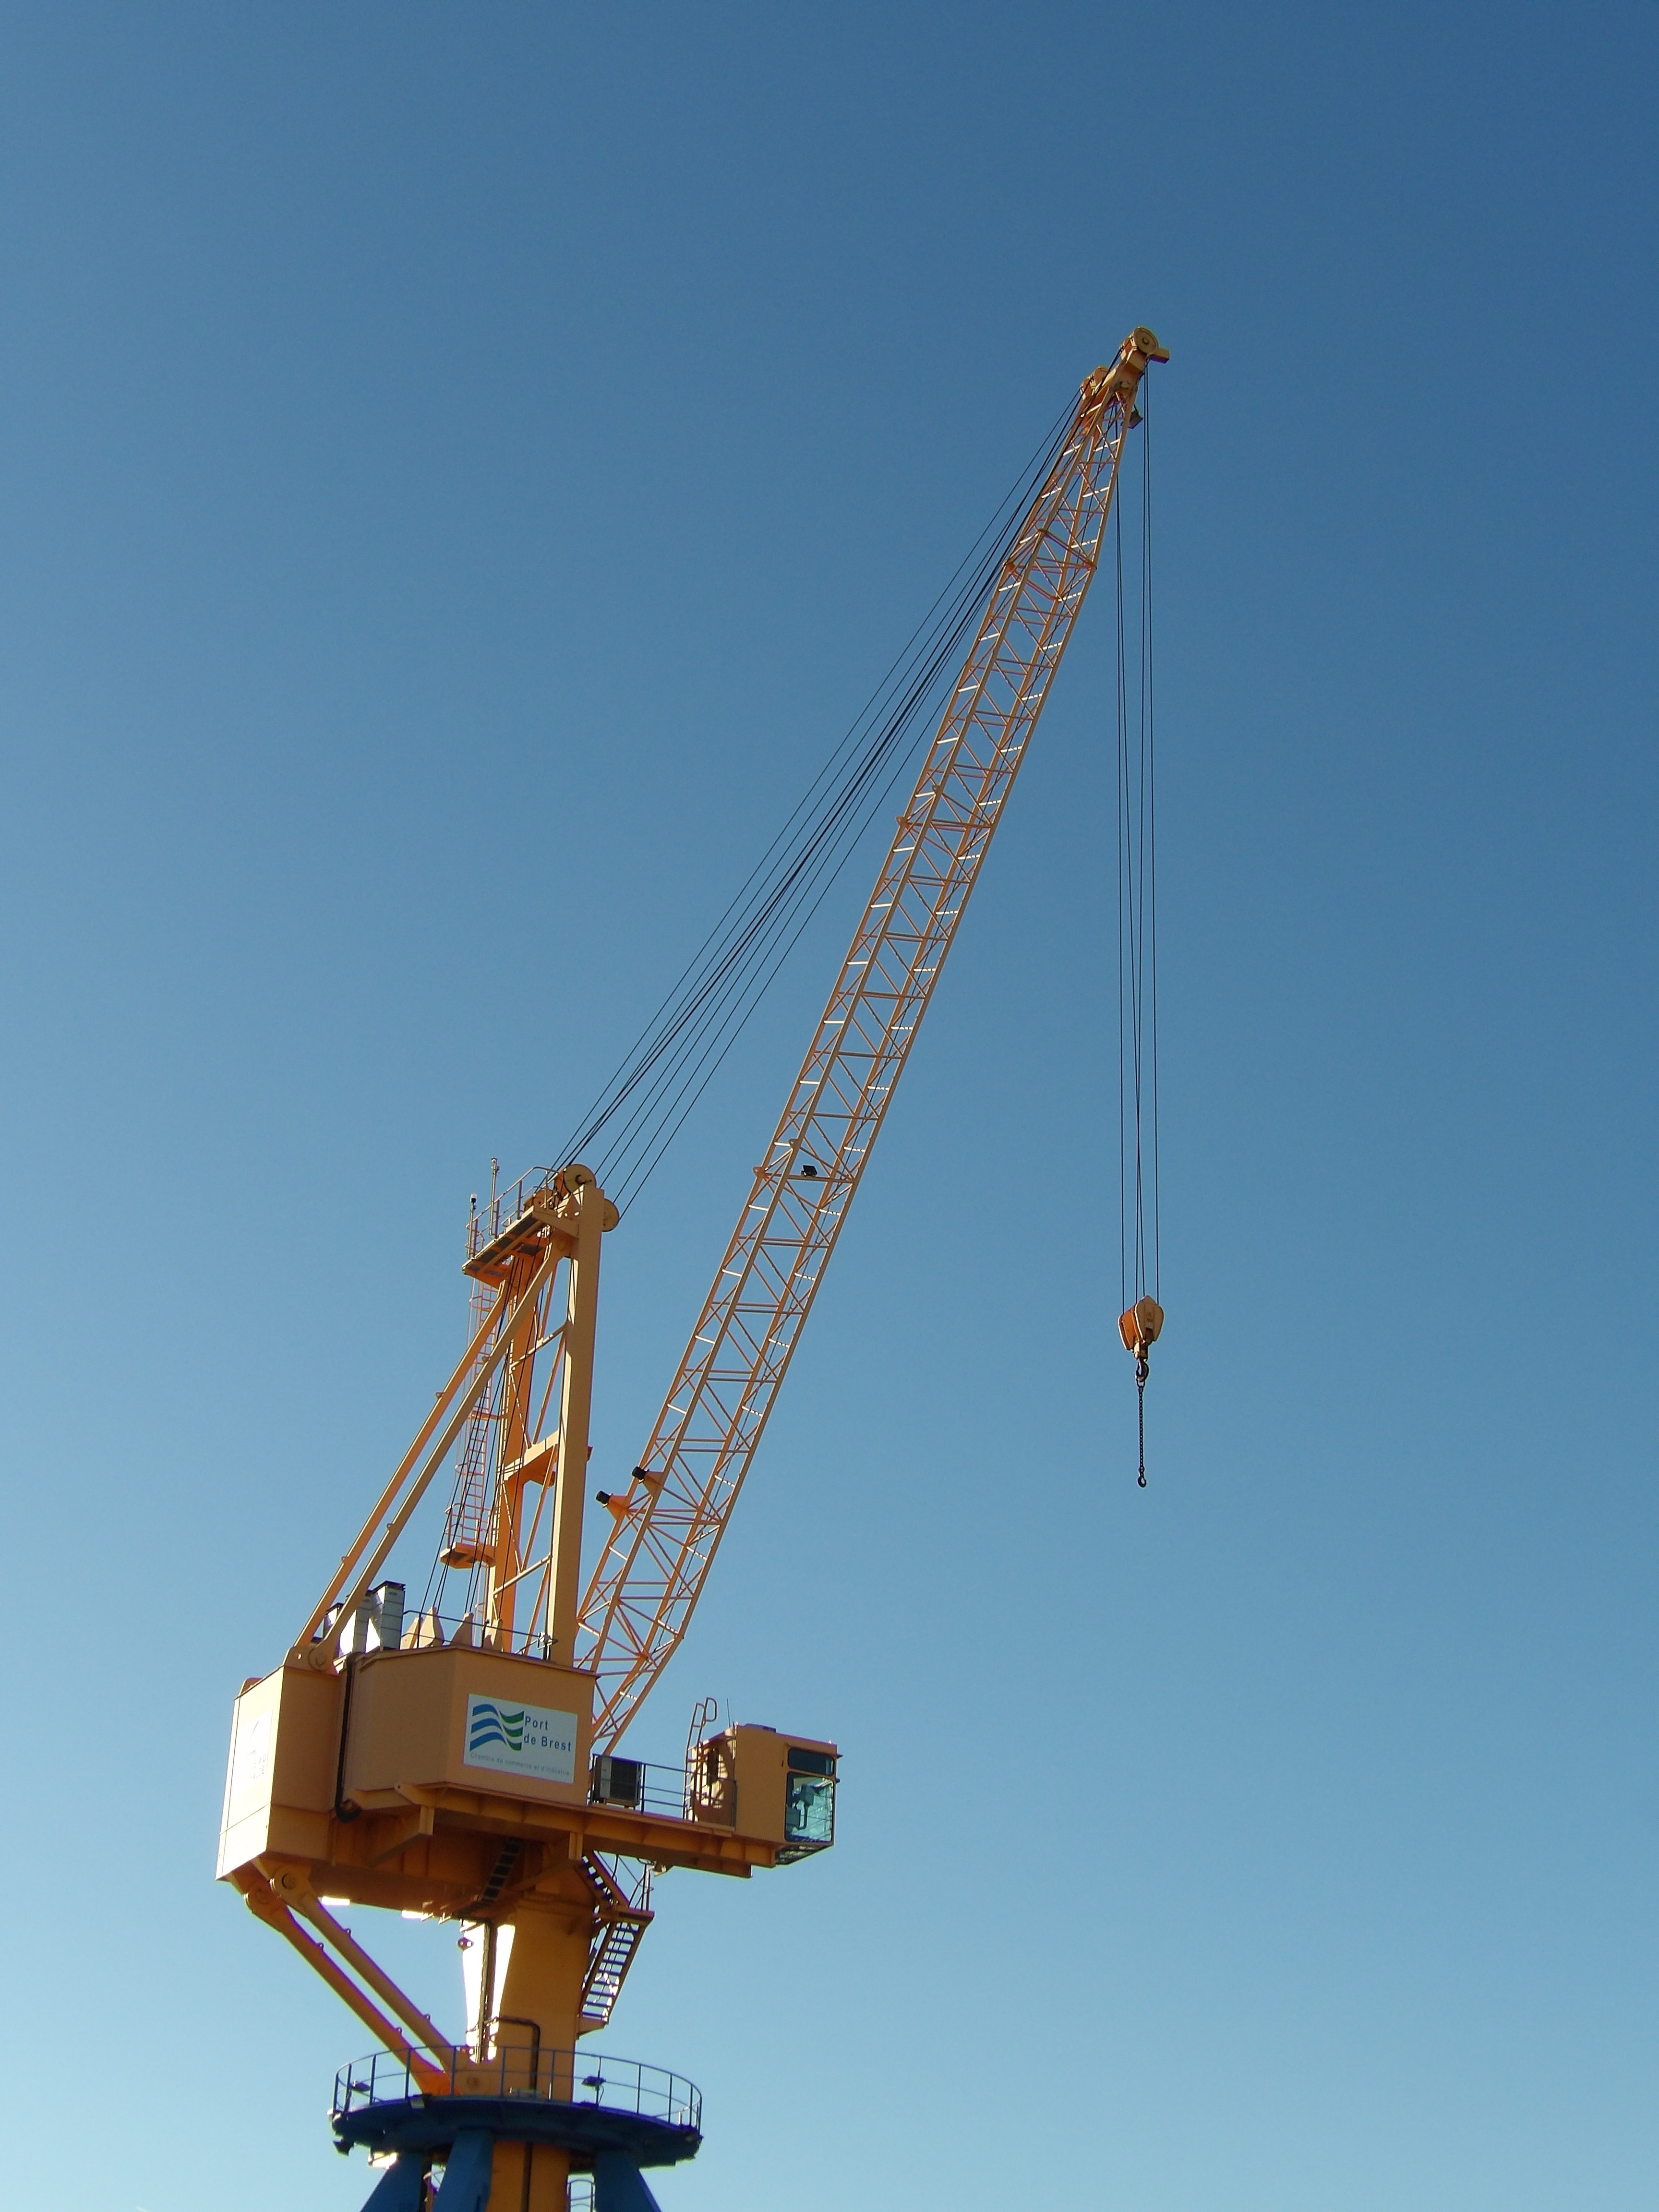 Crane, Port, Industrial, Commercial Port, crane - construction machinery, blue